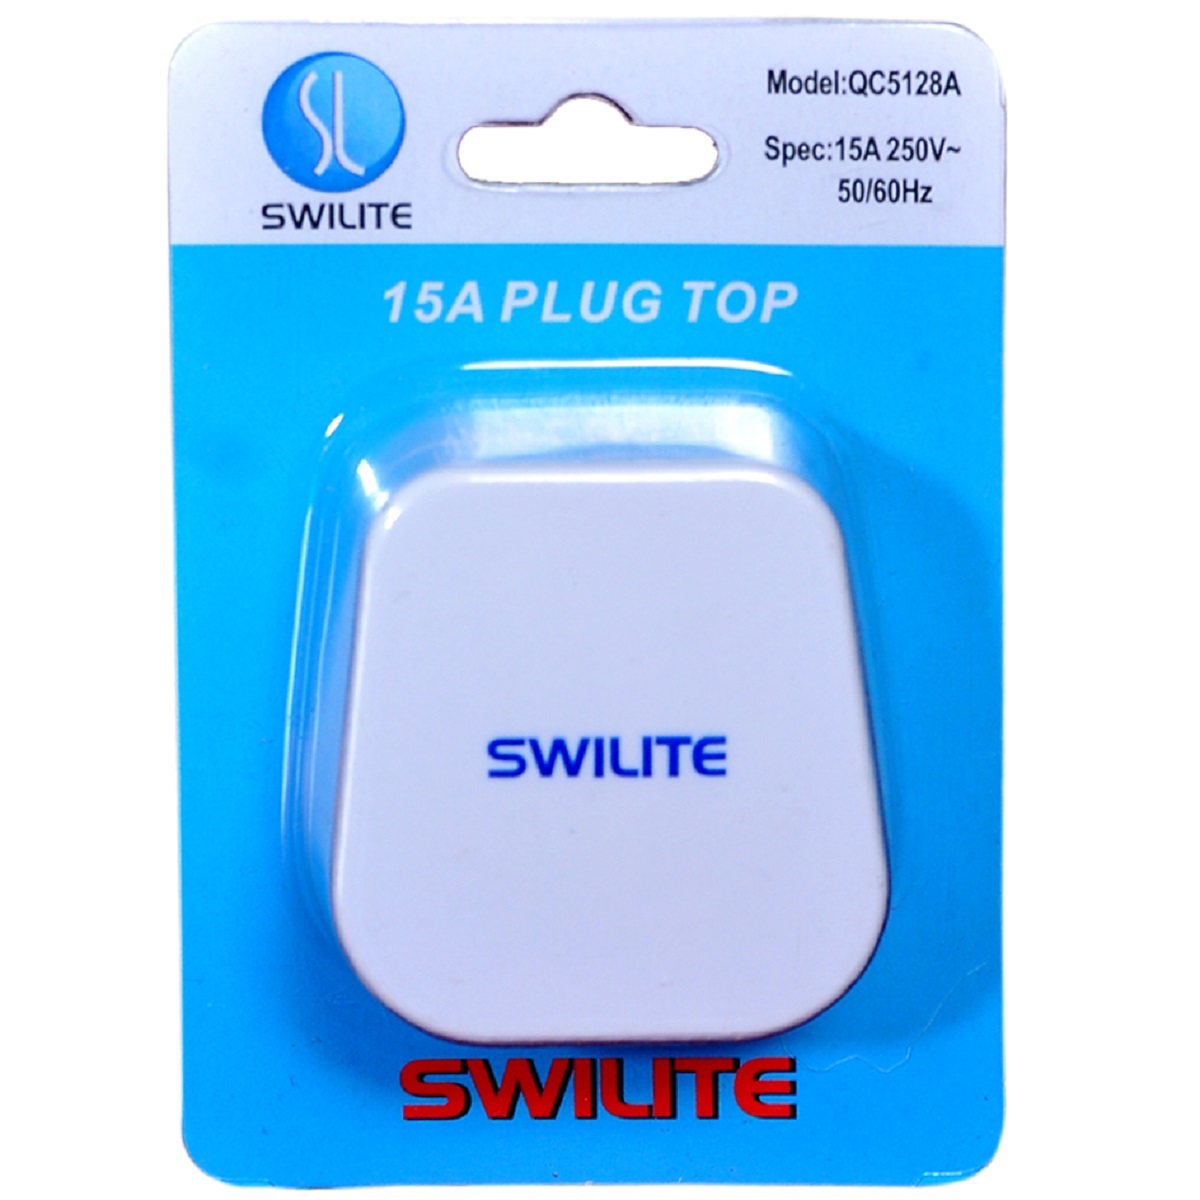 Swilite Multi Plug Adaptor 15A QC5128A